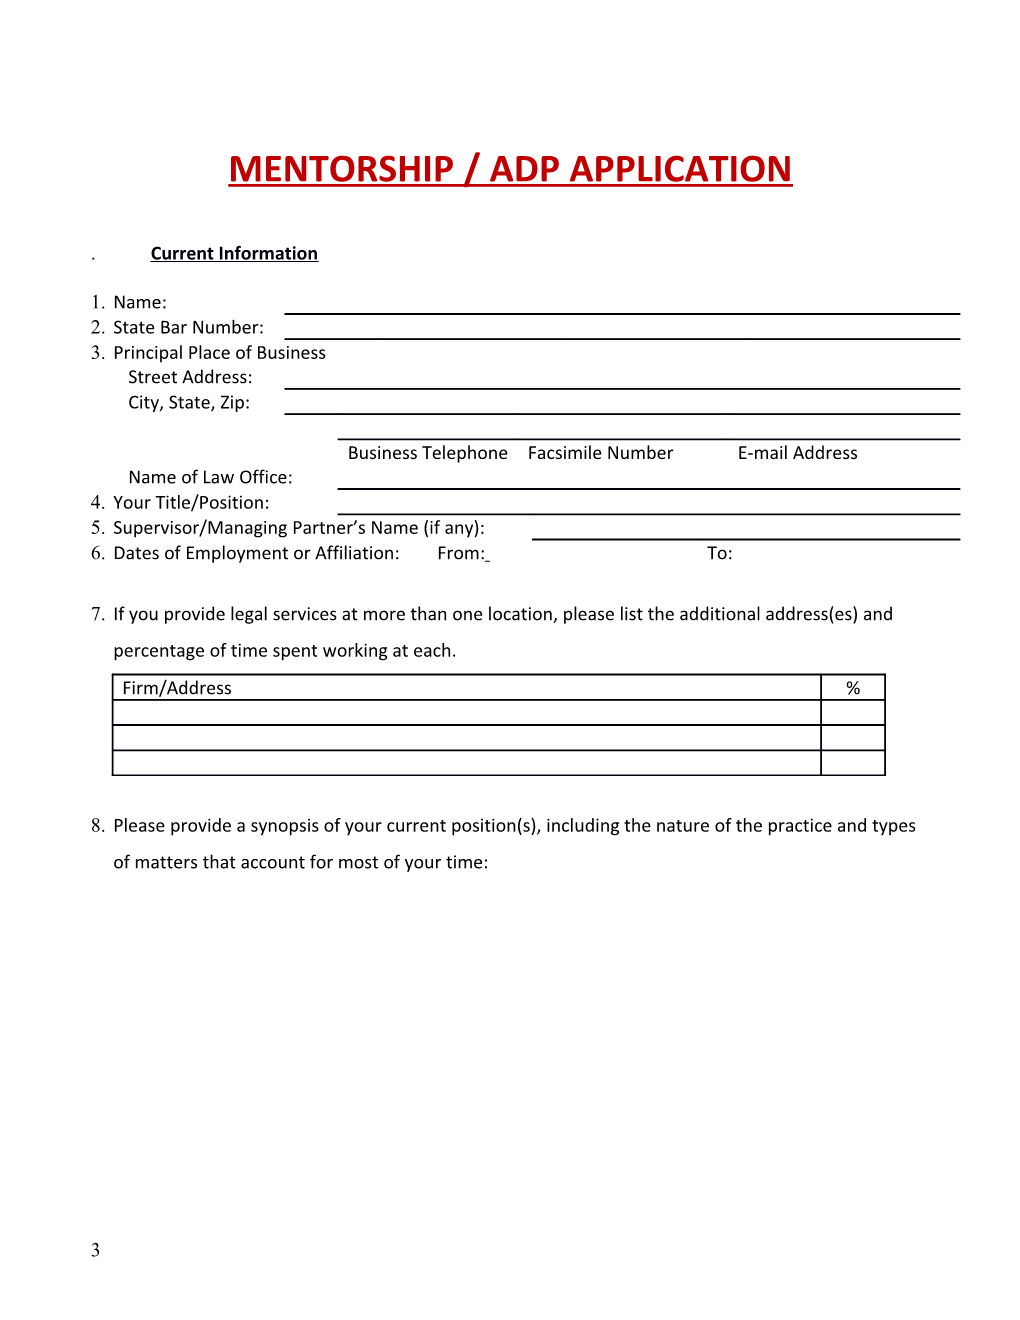 CJA Mentor ADP Application ND Cal 2014